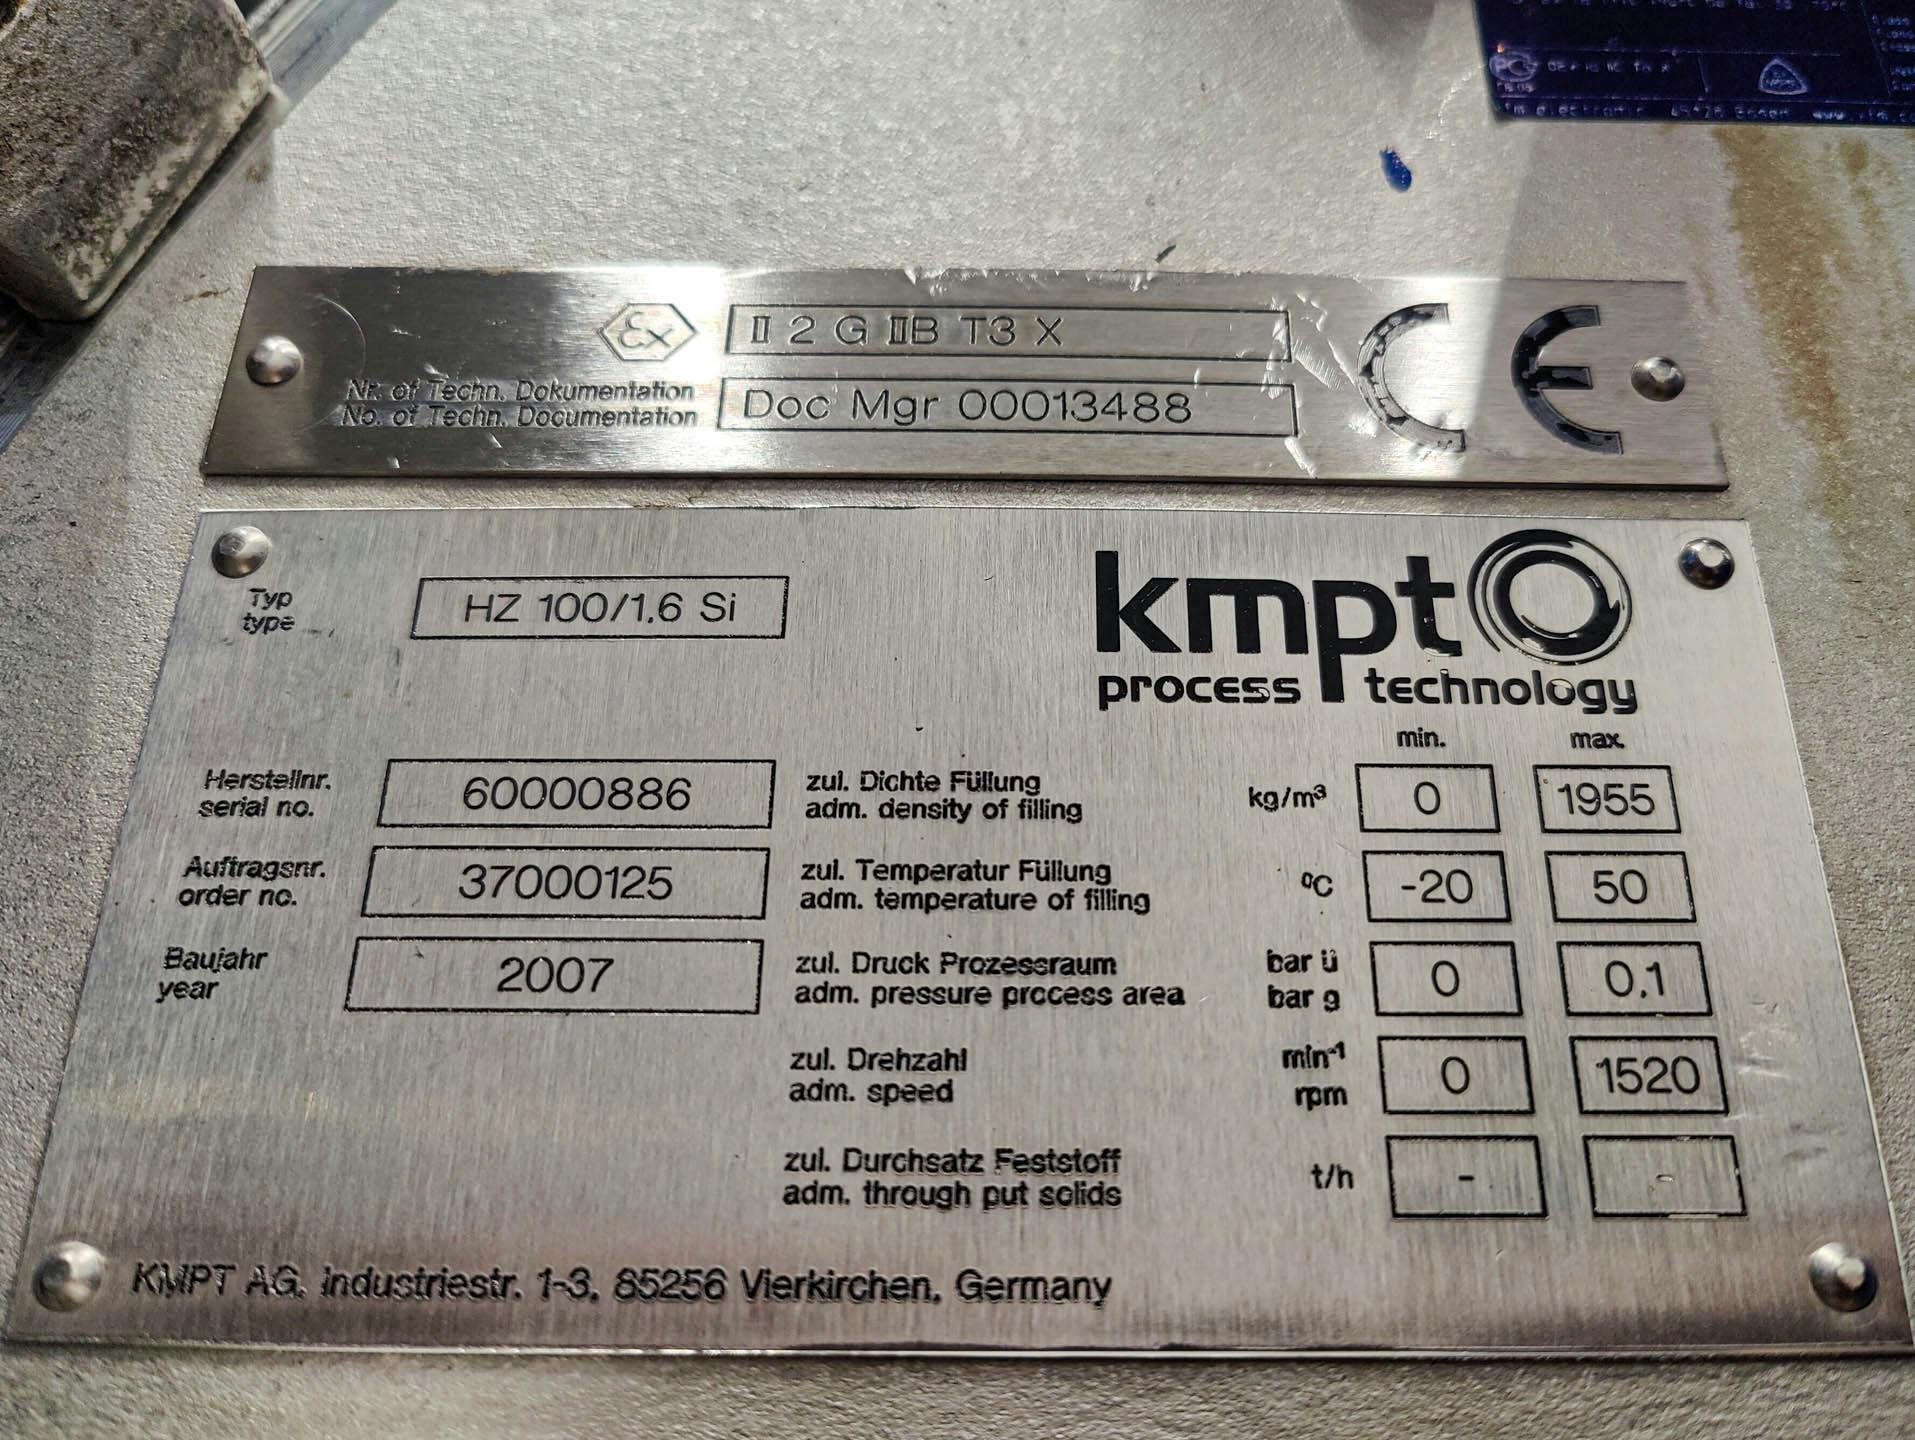 Andritz KMPT HZ-100/1.6 Si "syphon type centrifuge" - Centrifugeuse à couteau racleur - image 9